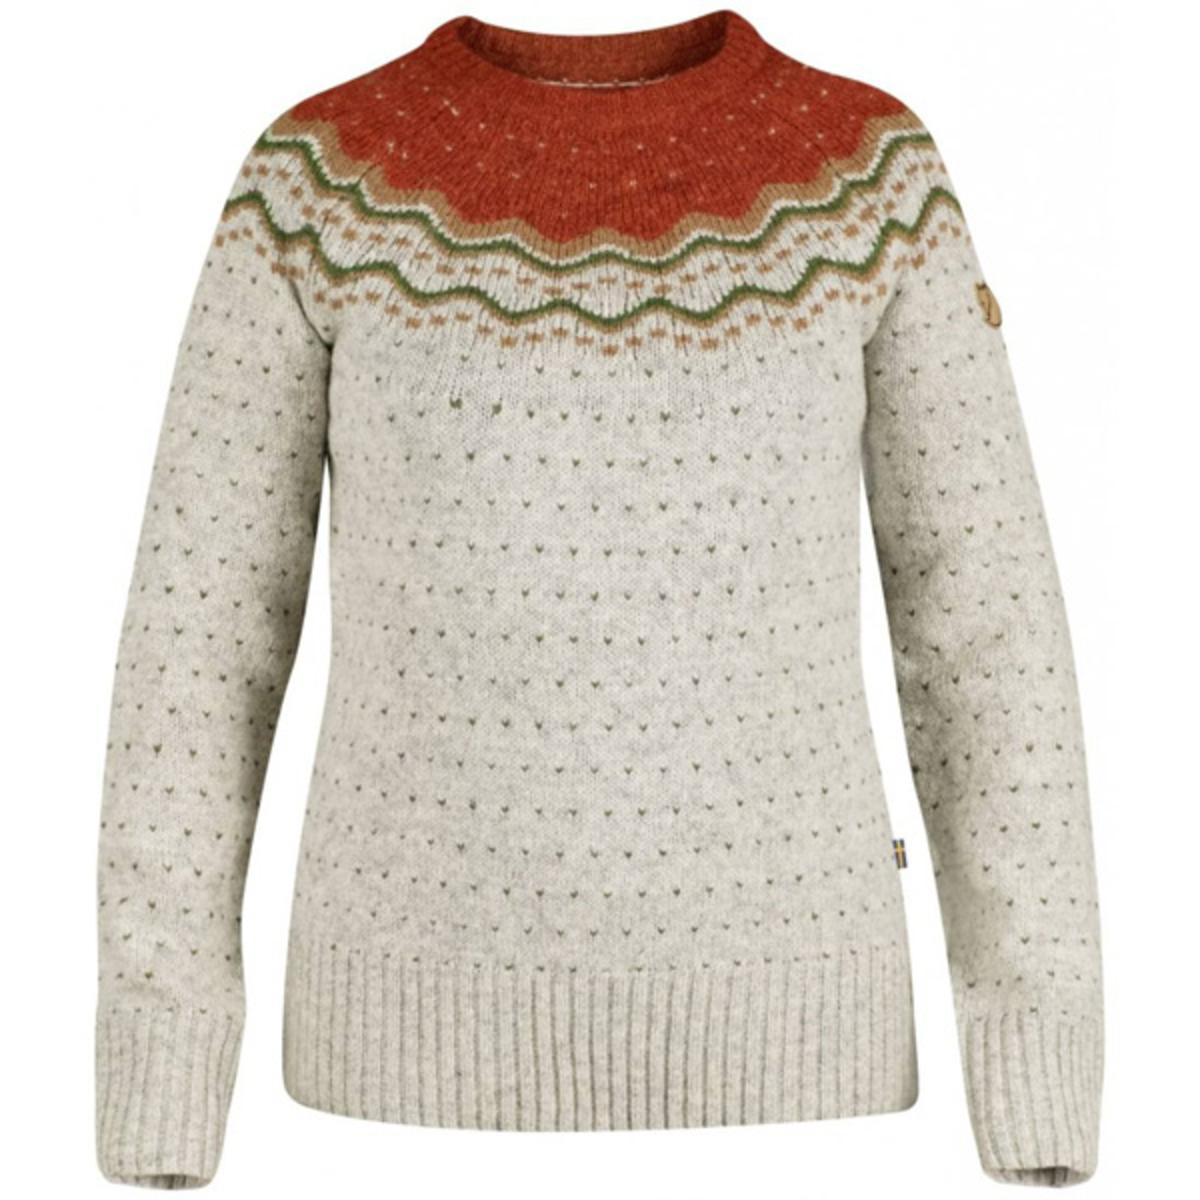 FjallRaven Women's Ovik Knit Sweater